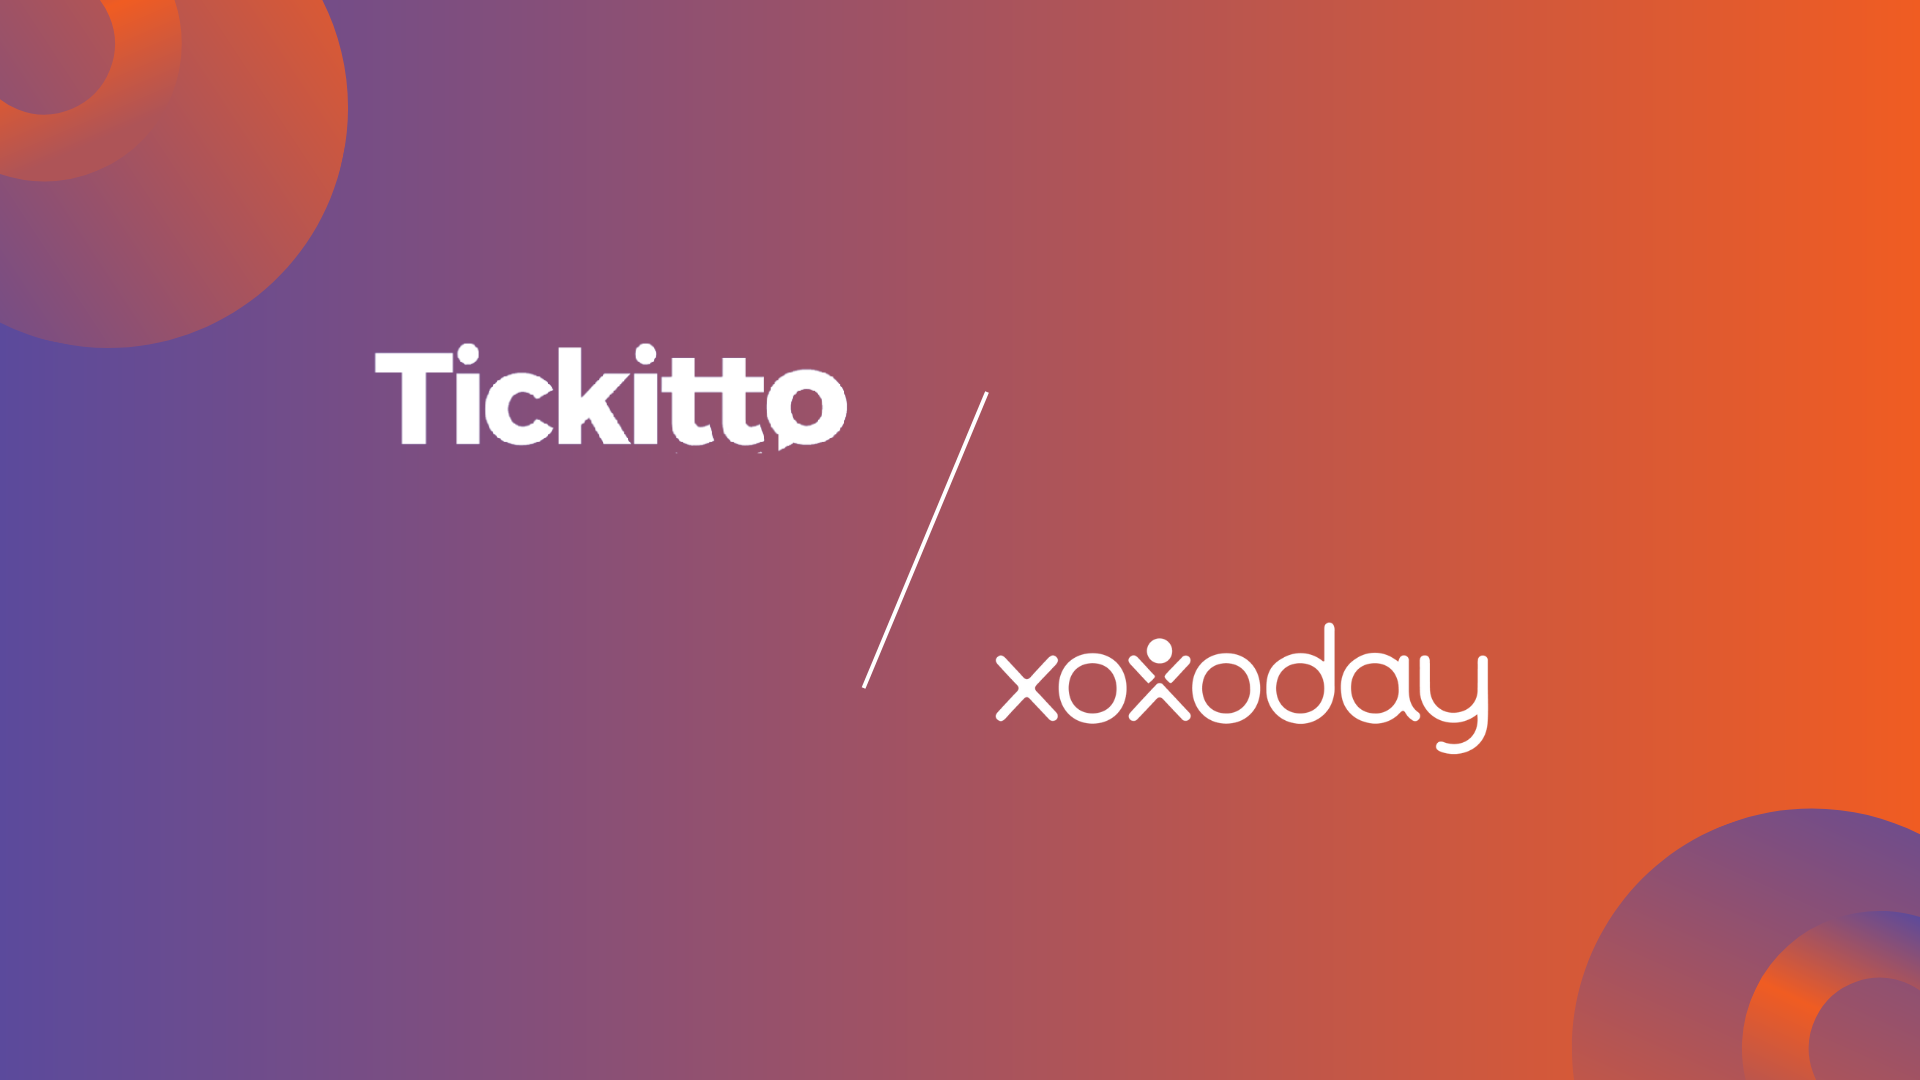 Tickitto partners wity Xoxoday